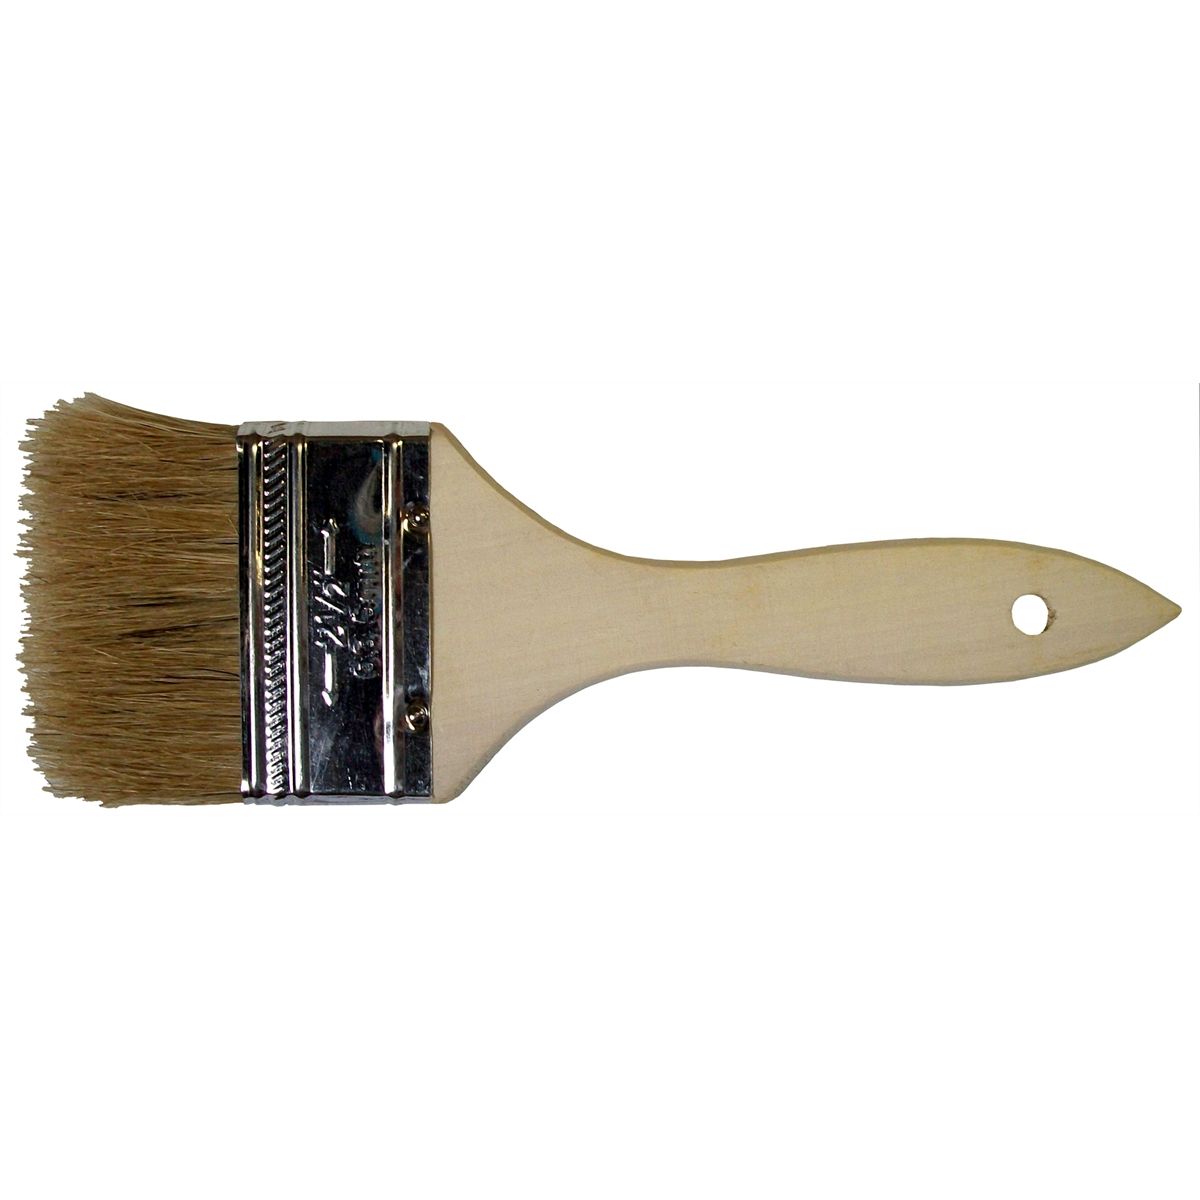  SEWACC 50 Pcs Paint Brush Wool Brush Professional